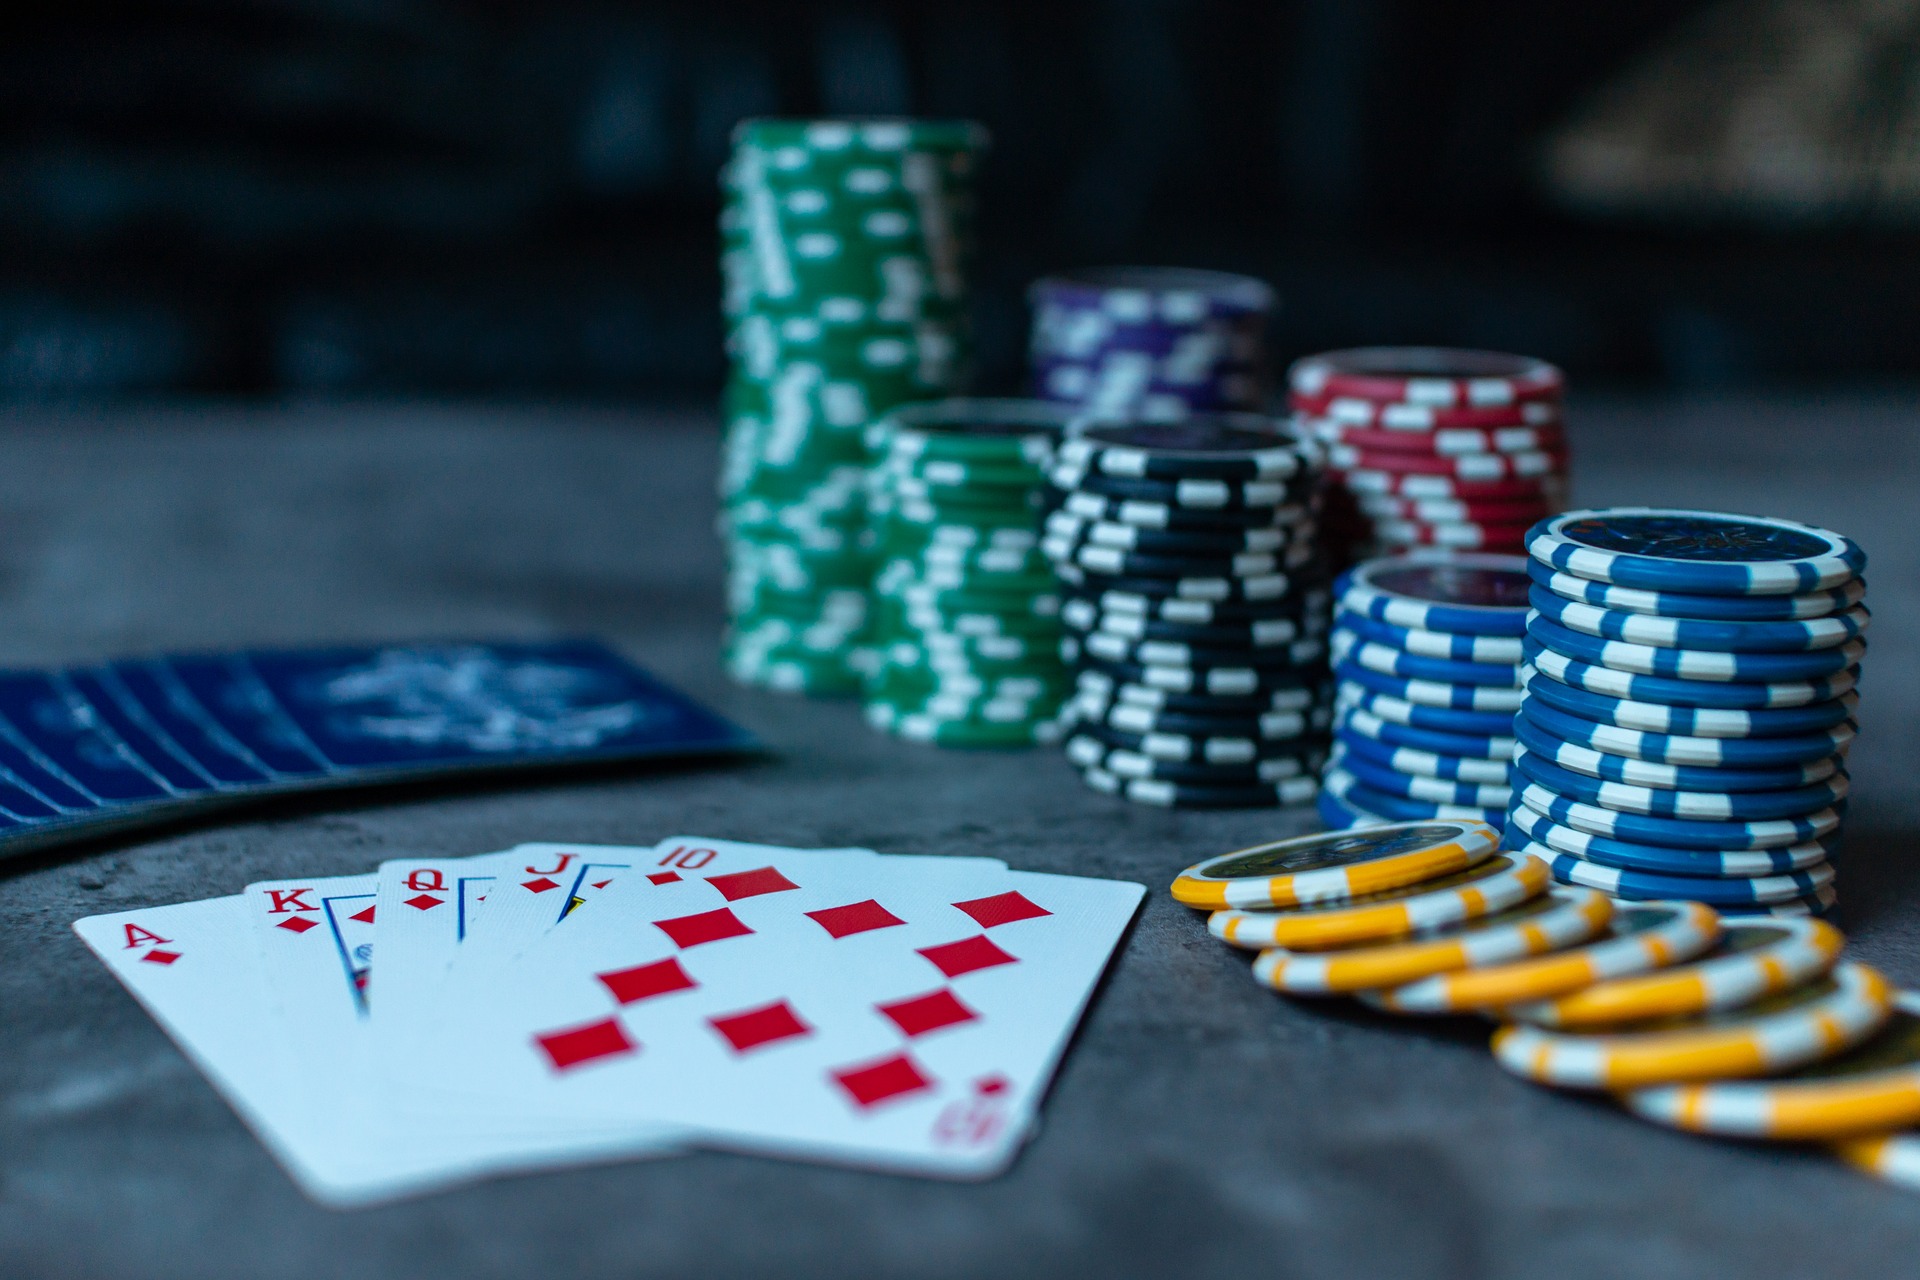 Bijoux poker : comment attirer la chance avec le bijou poker zanzi ?